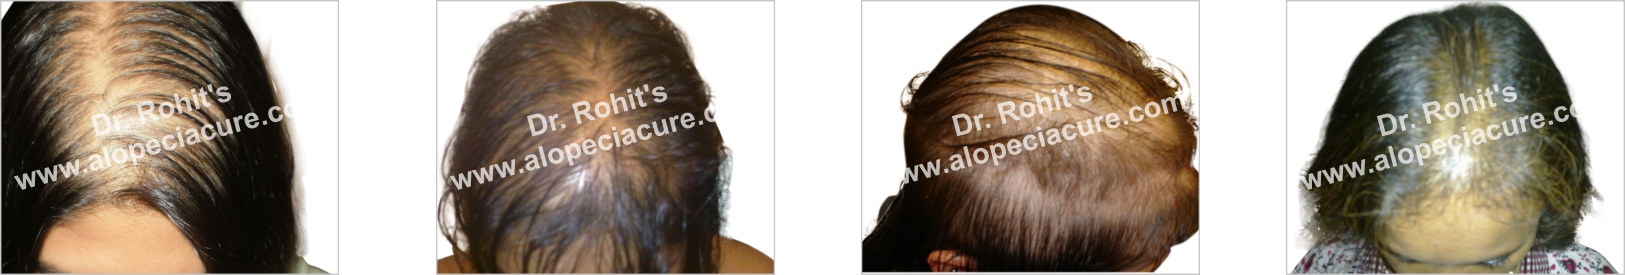 alopecia hair loss treatment - ayurvedic treatment - no side effect